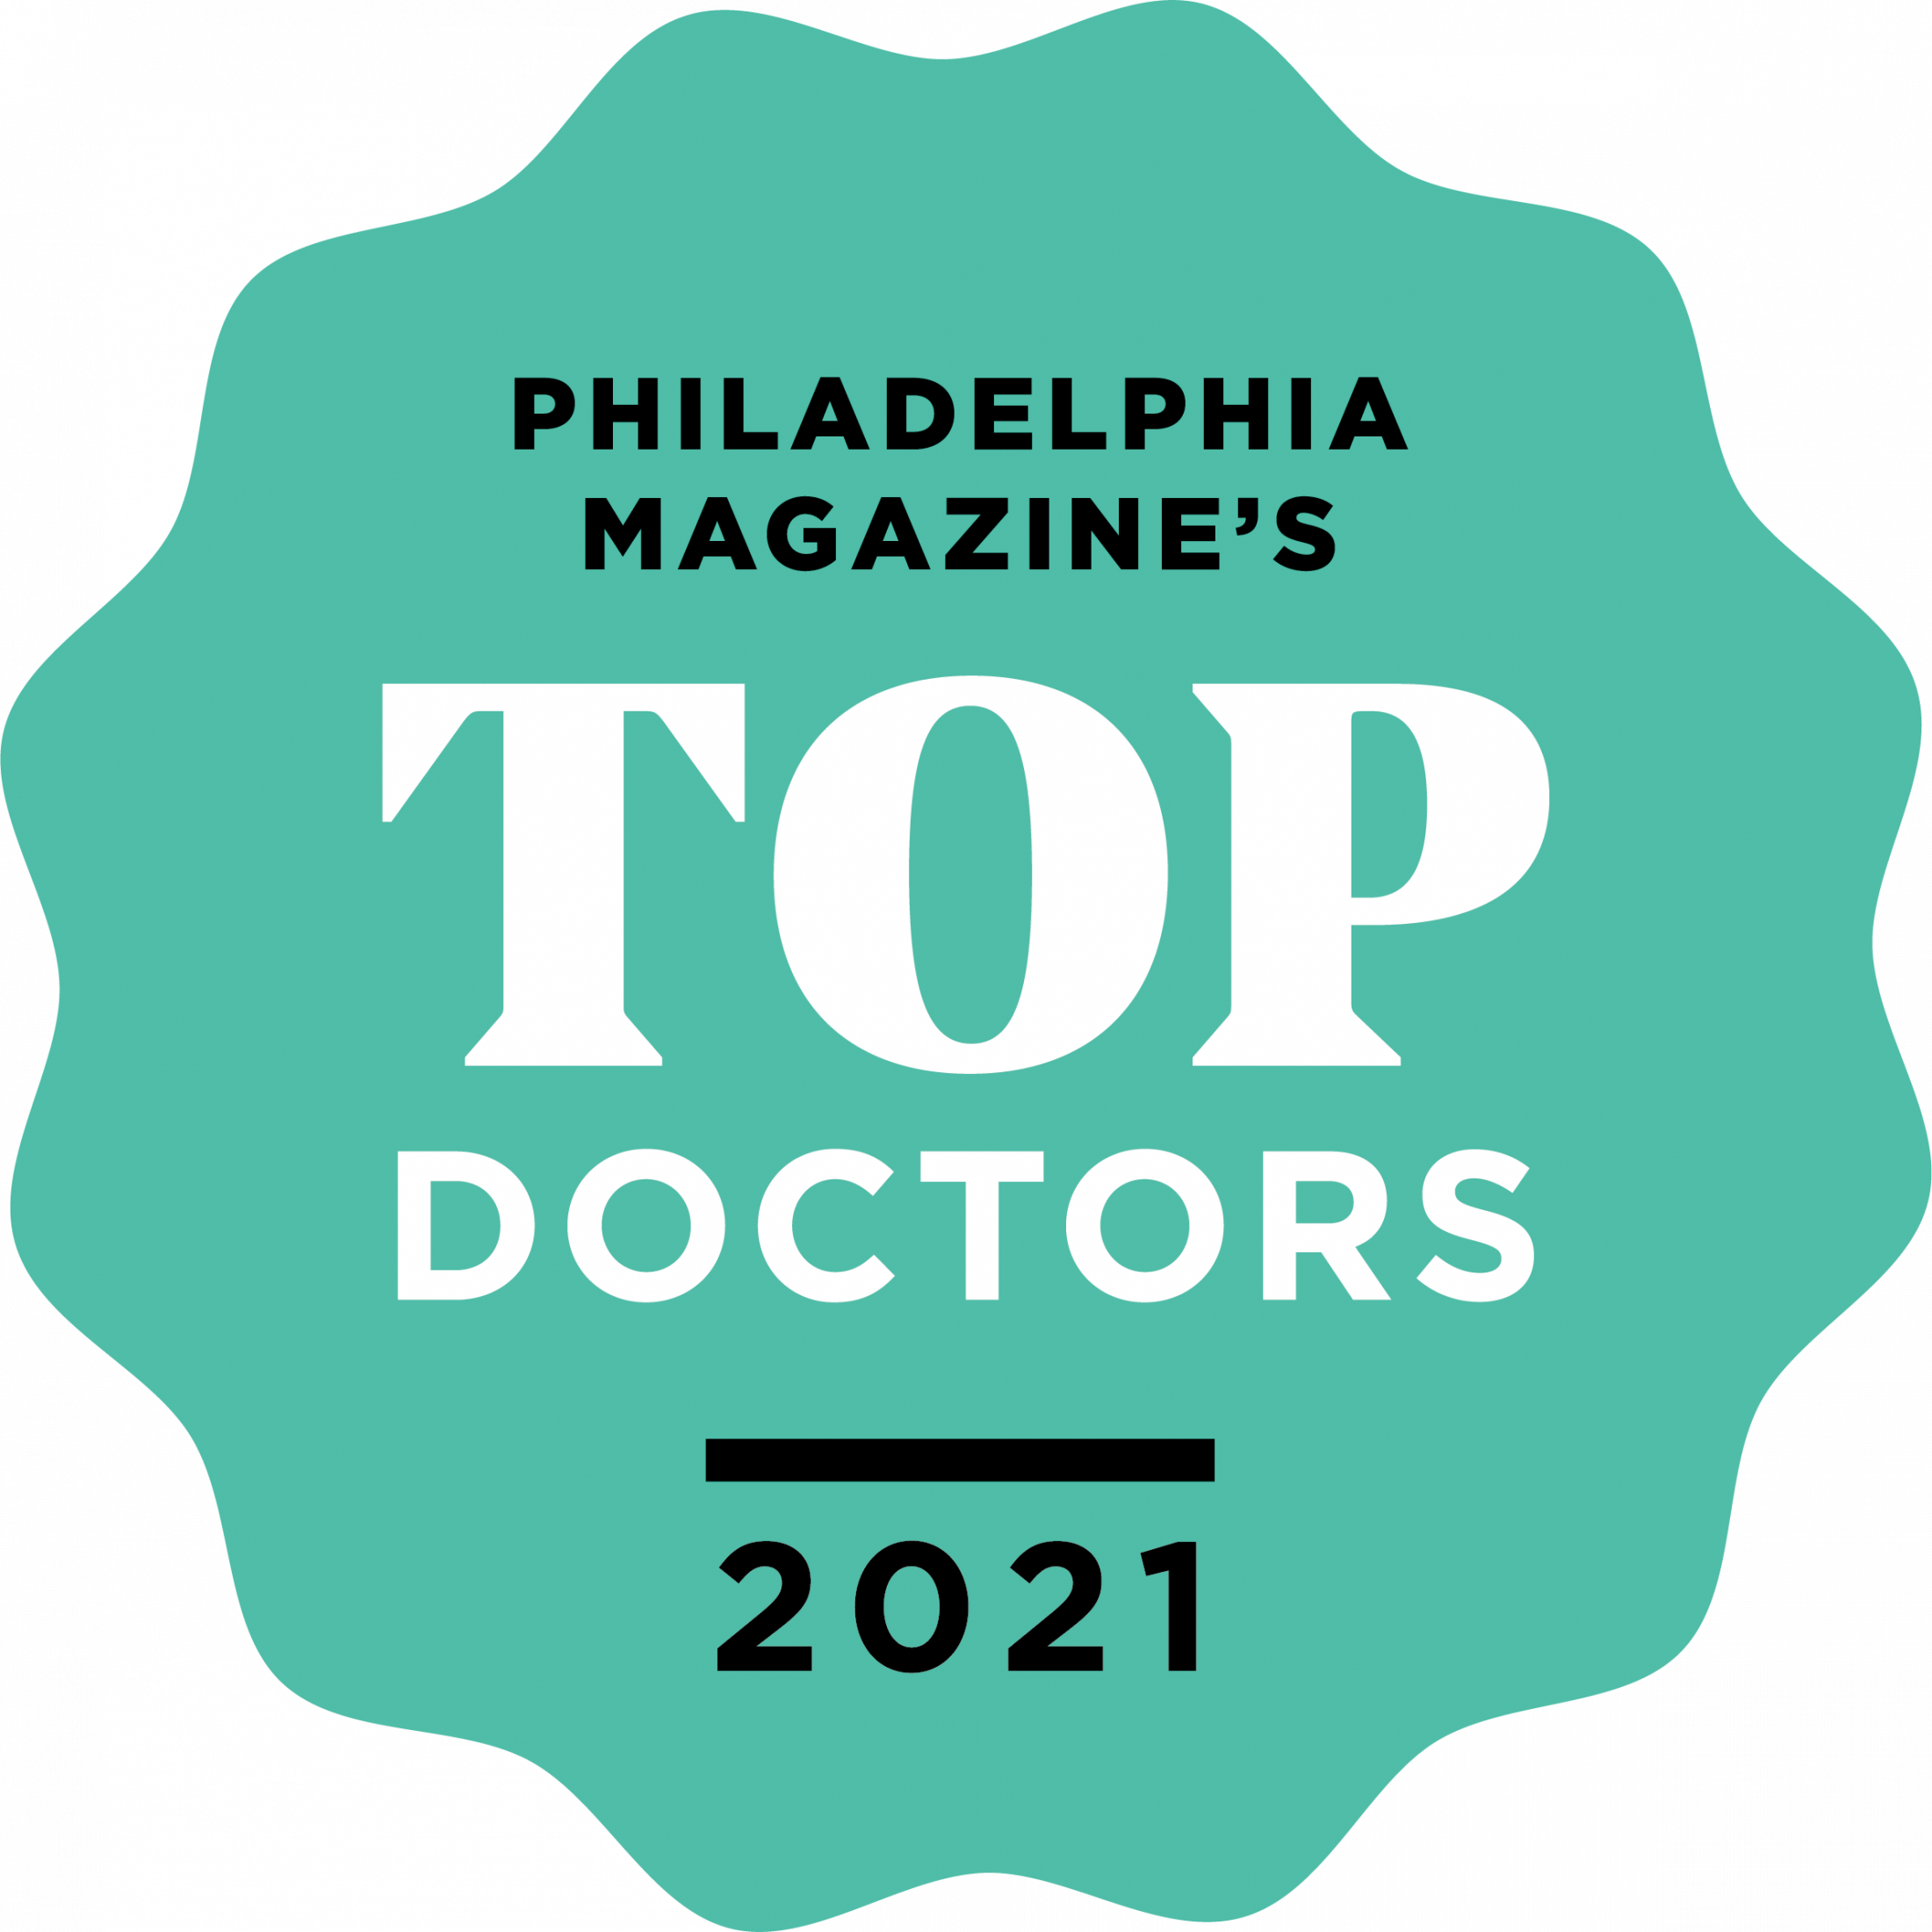 Top Doctor's Magazine Winners Badge